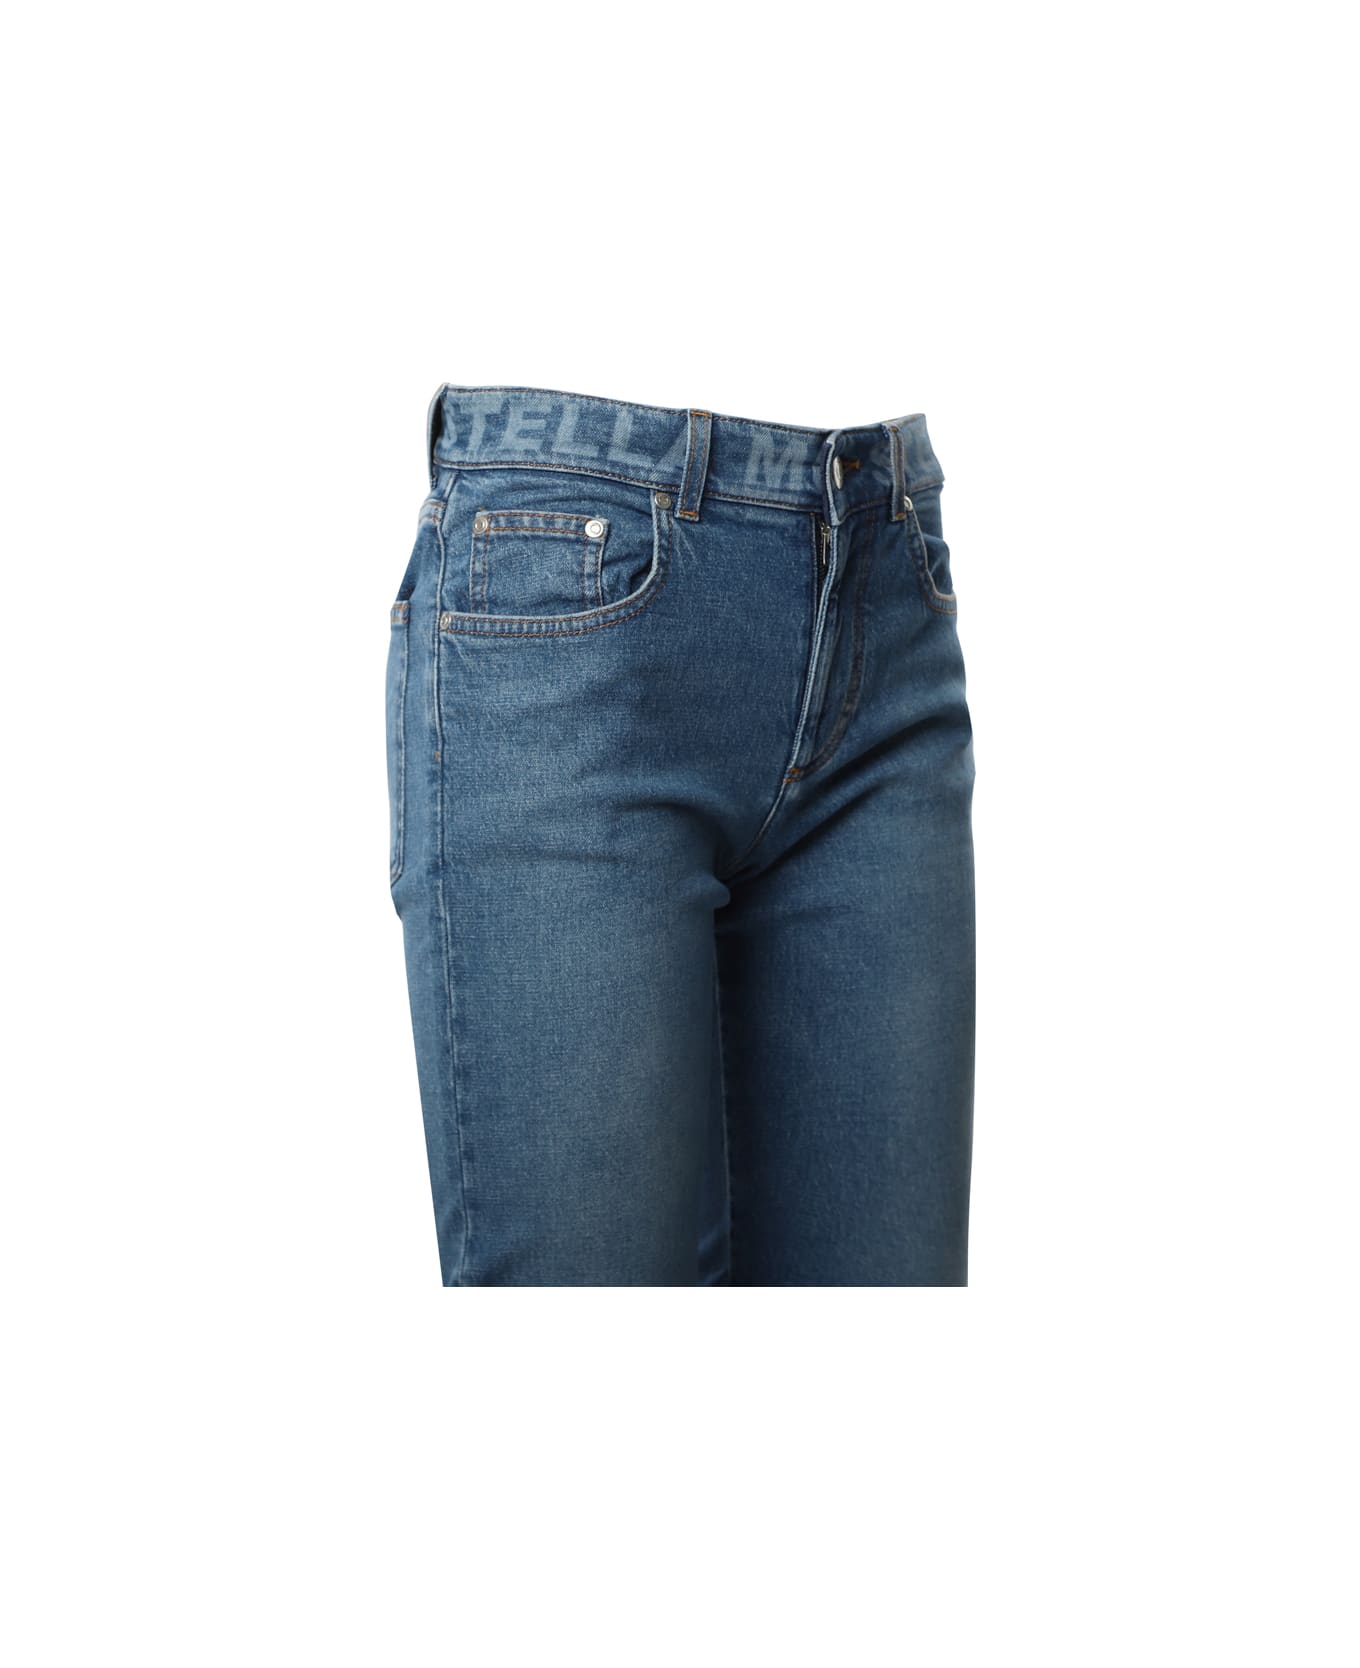 Stella McCartney Flared Jeans In Cotton - Medium blue